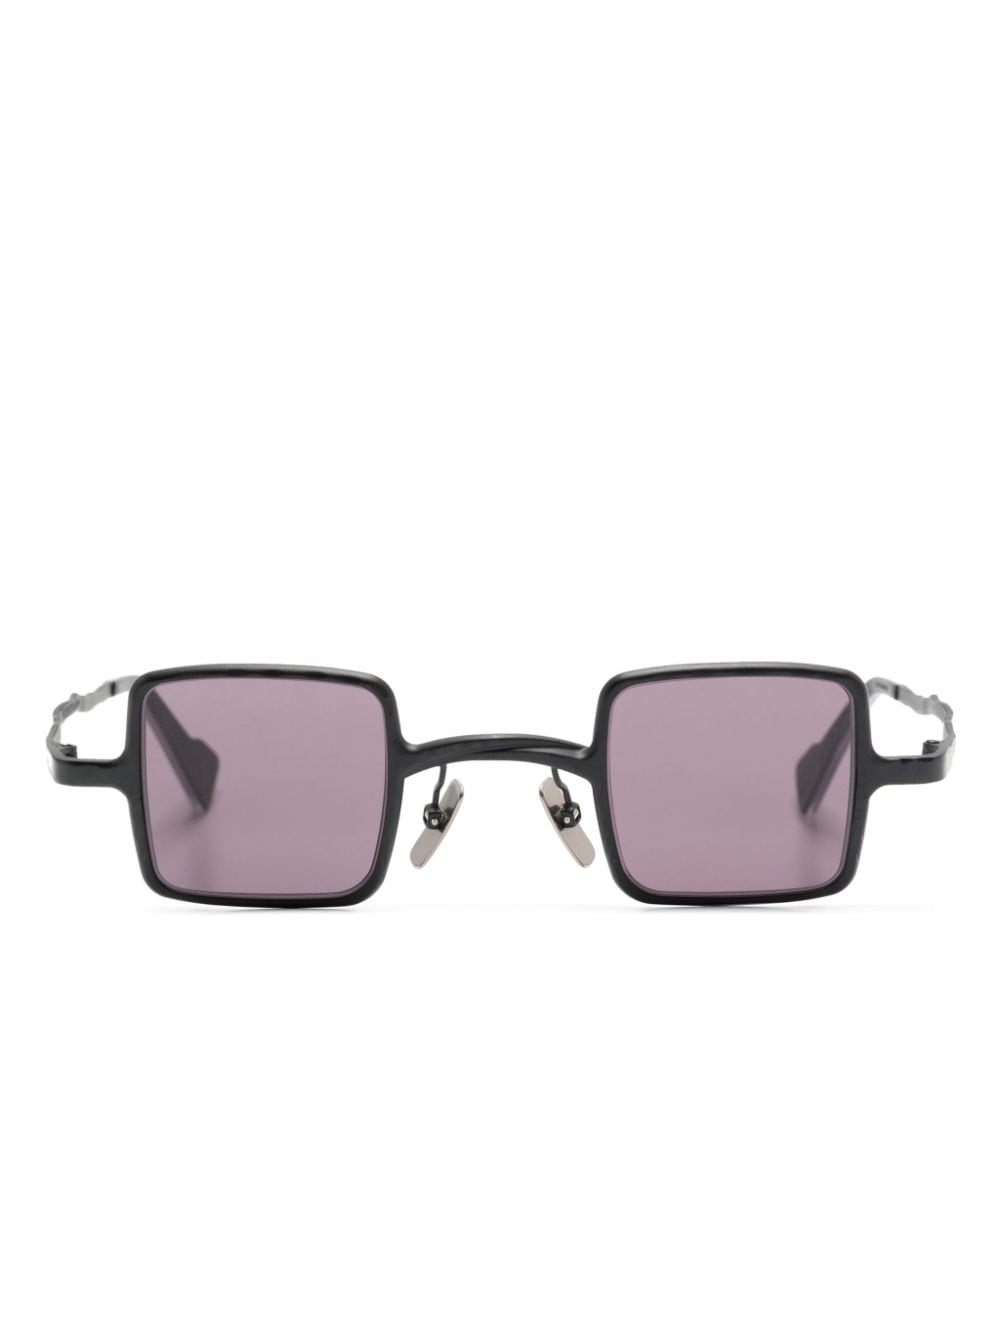 Kuboraum Z21 square-shape sunglasses - Grey von Kuboraum